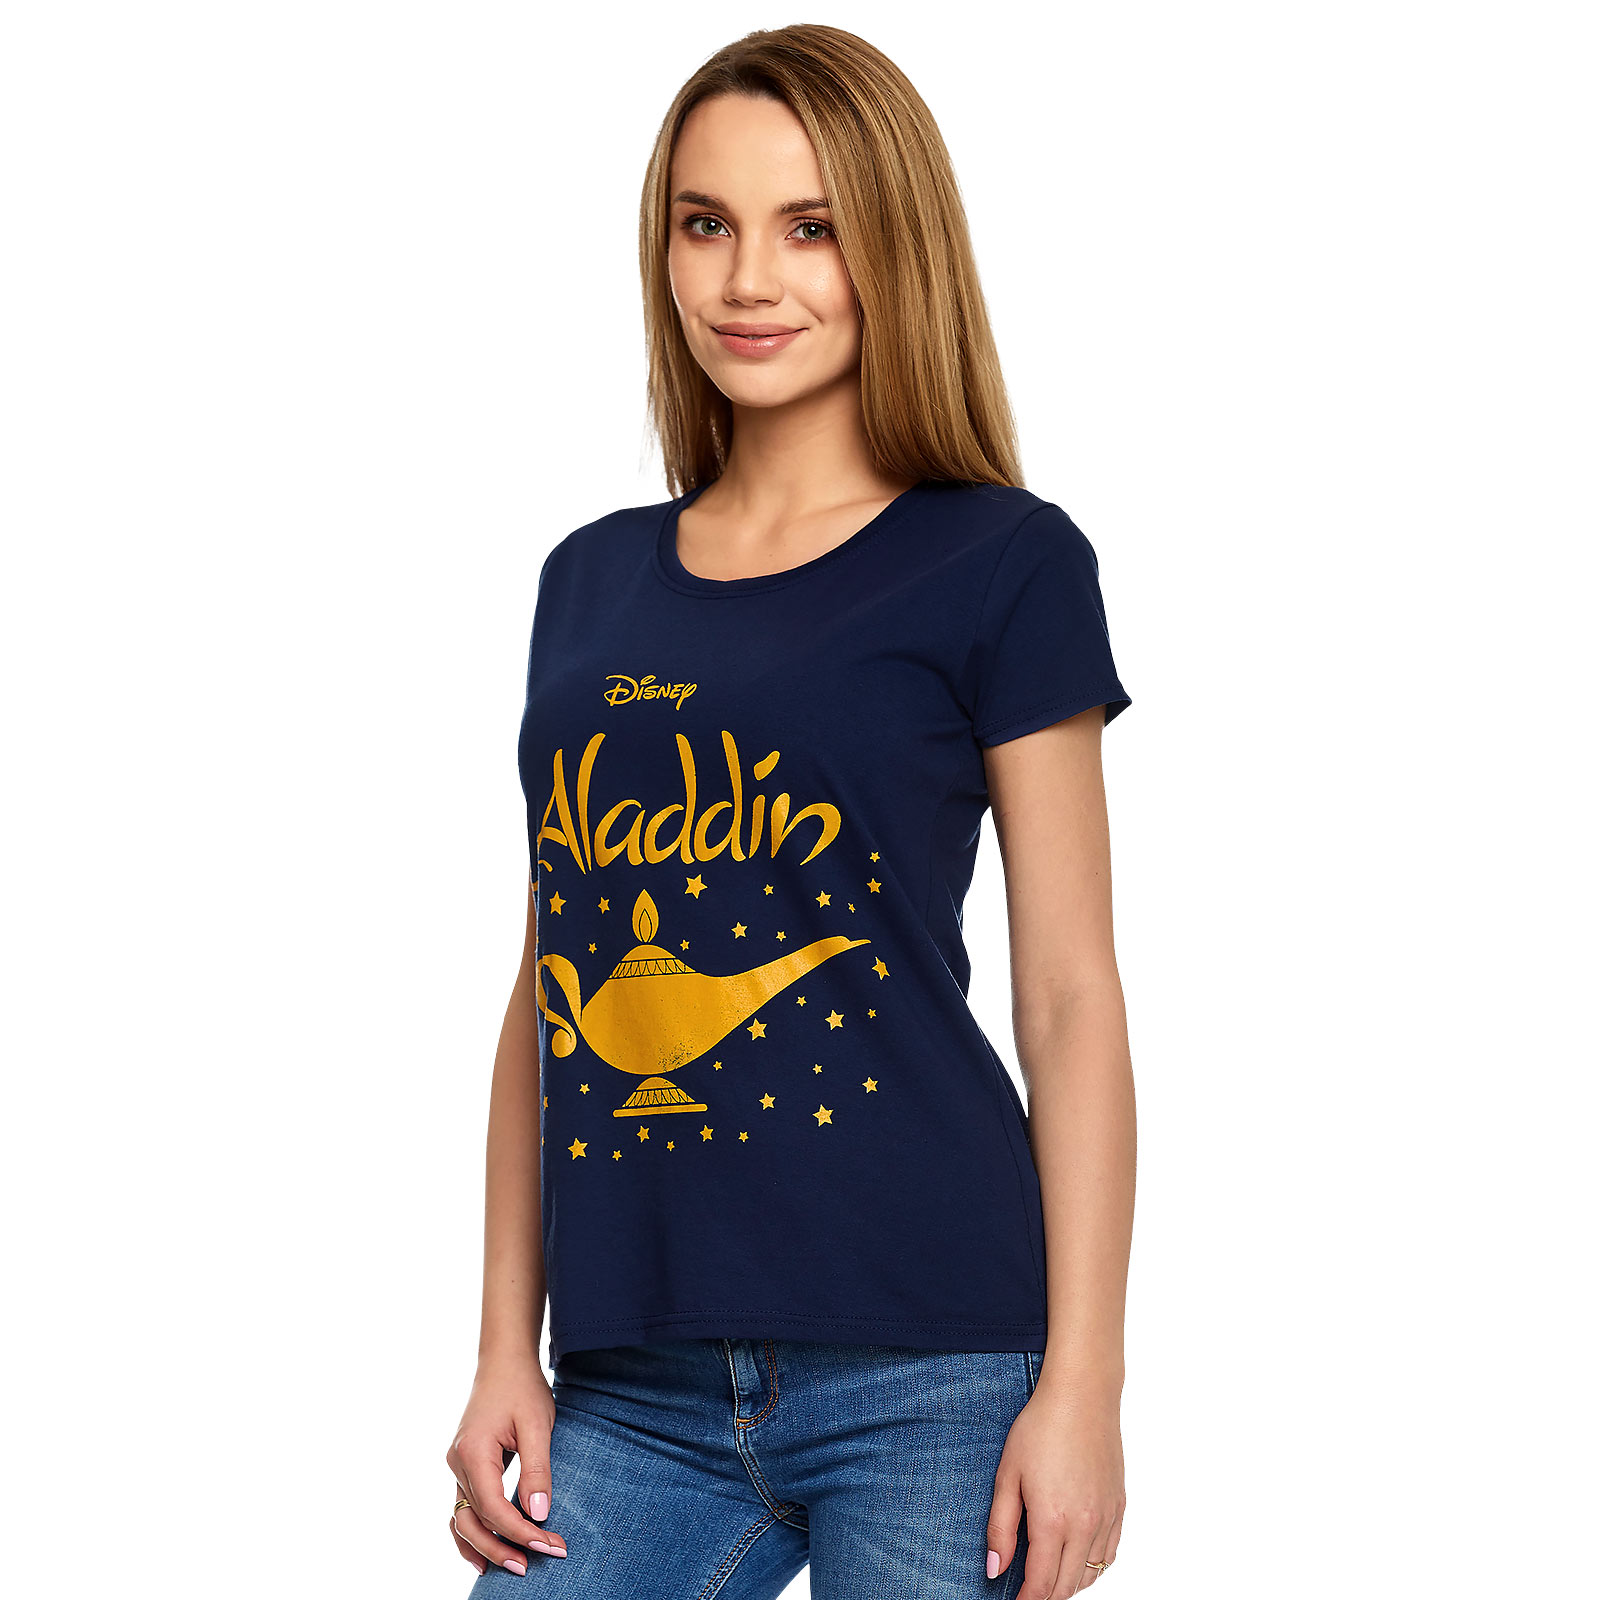 Aladdin - Wonderlamp Dames T-shirt Blauw